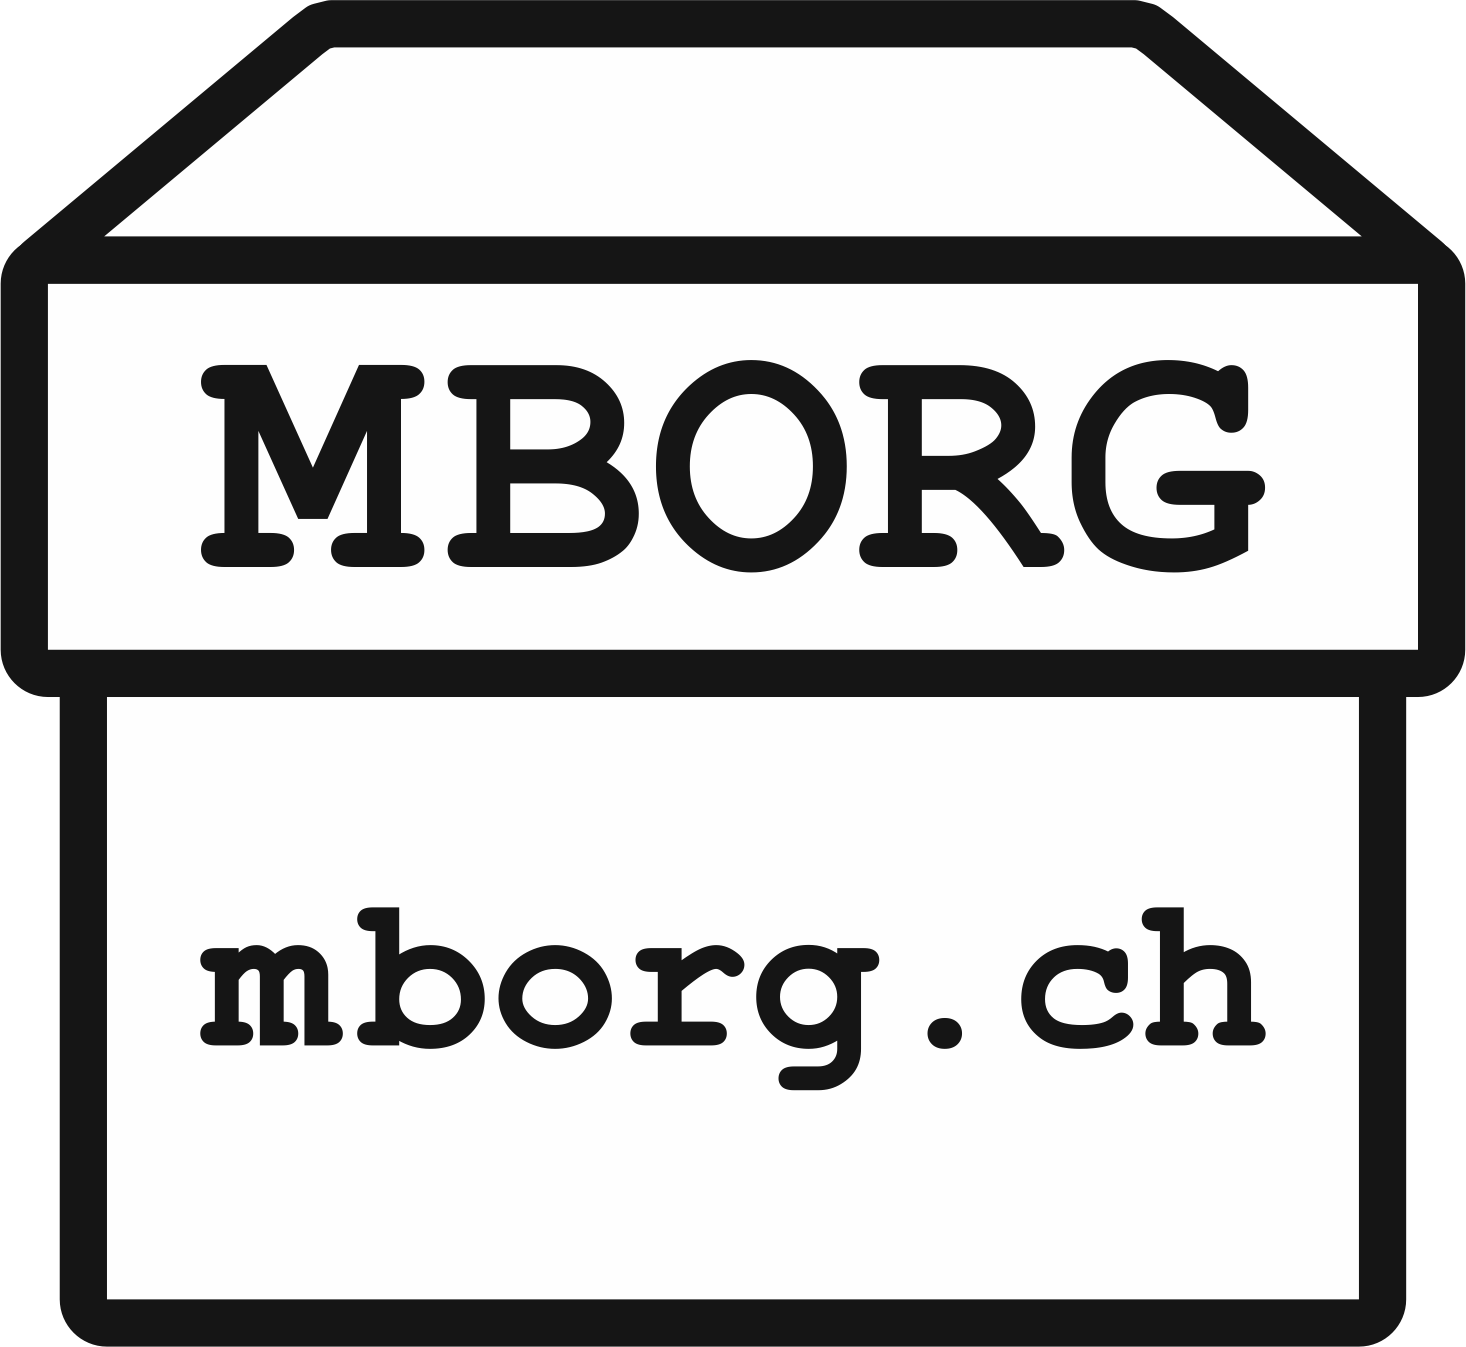 mborg.ch